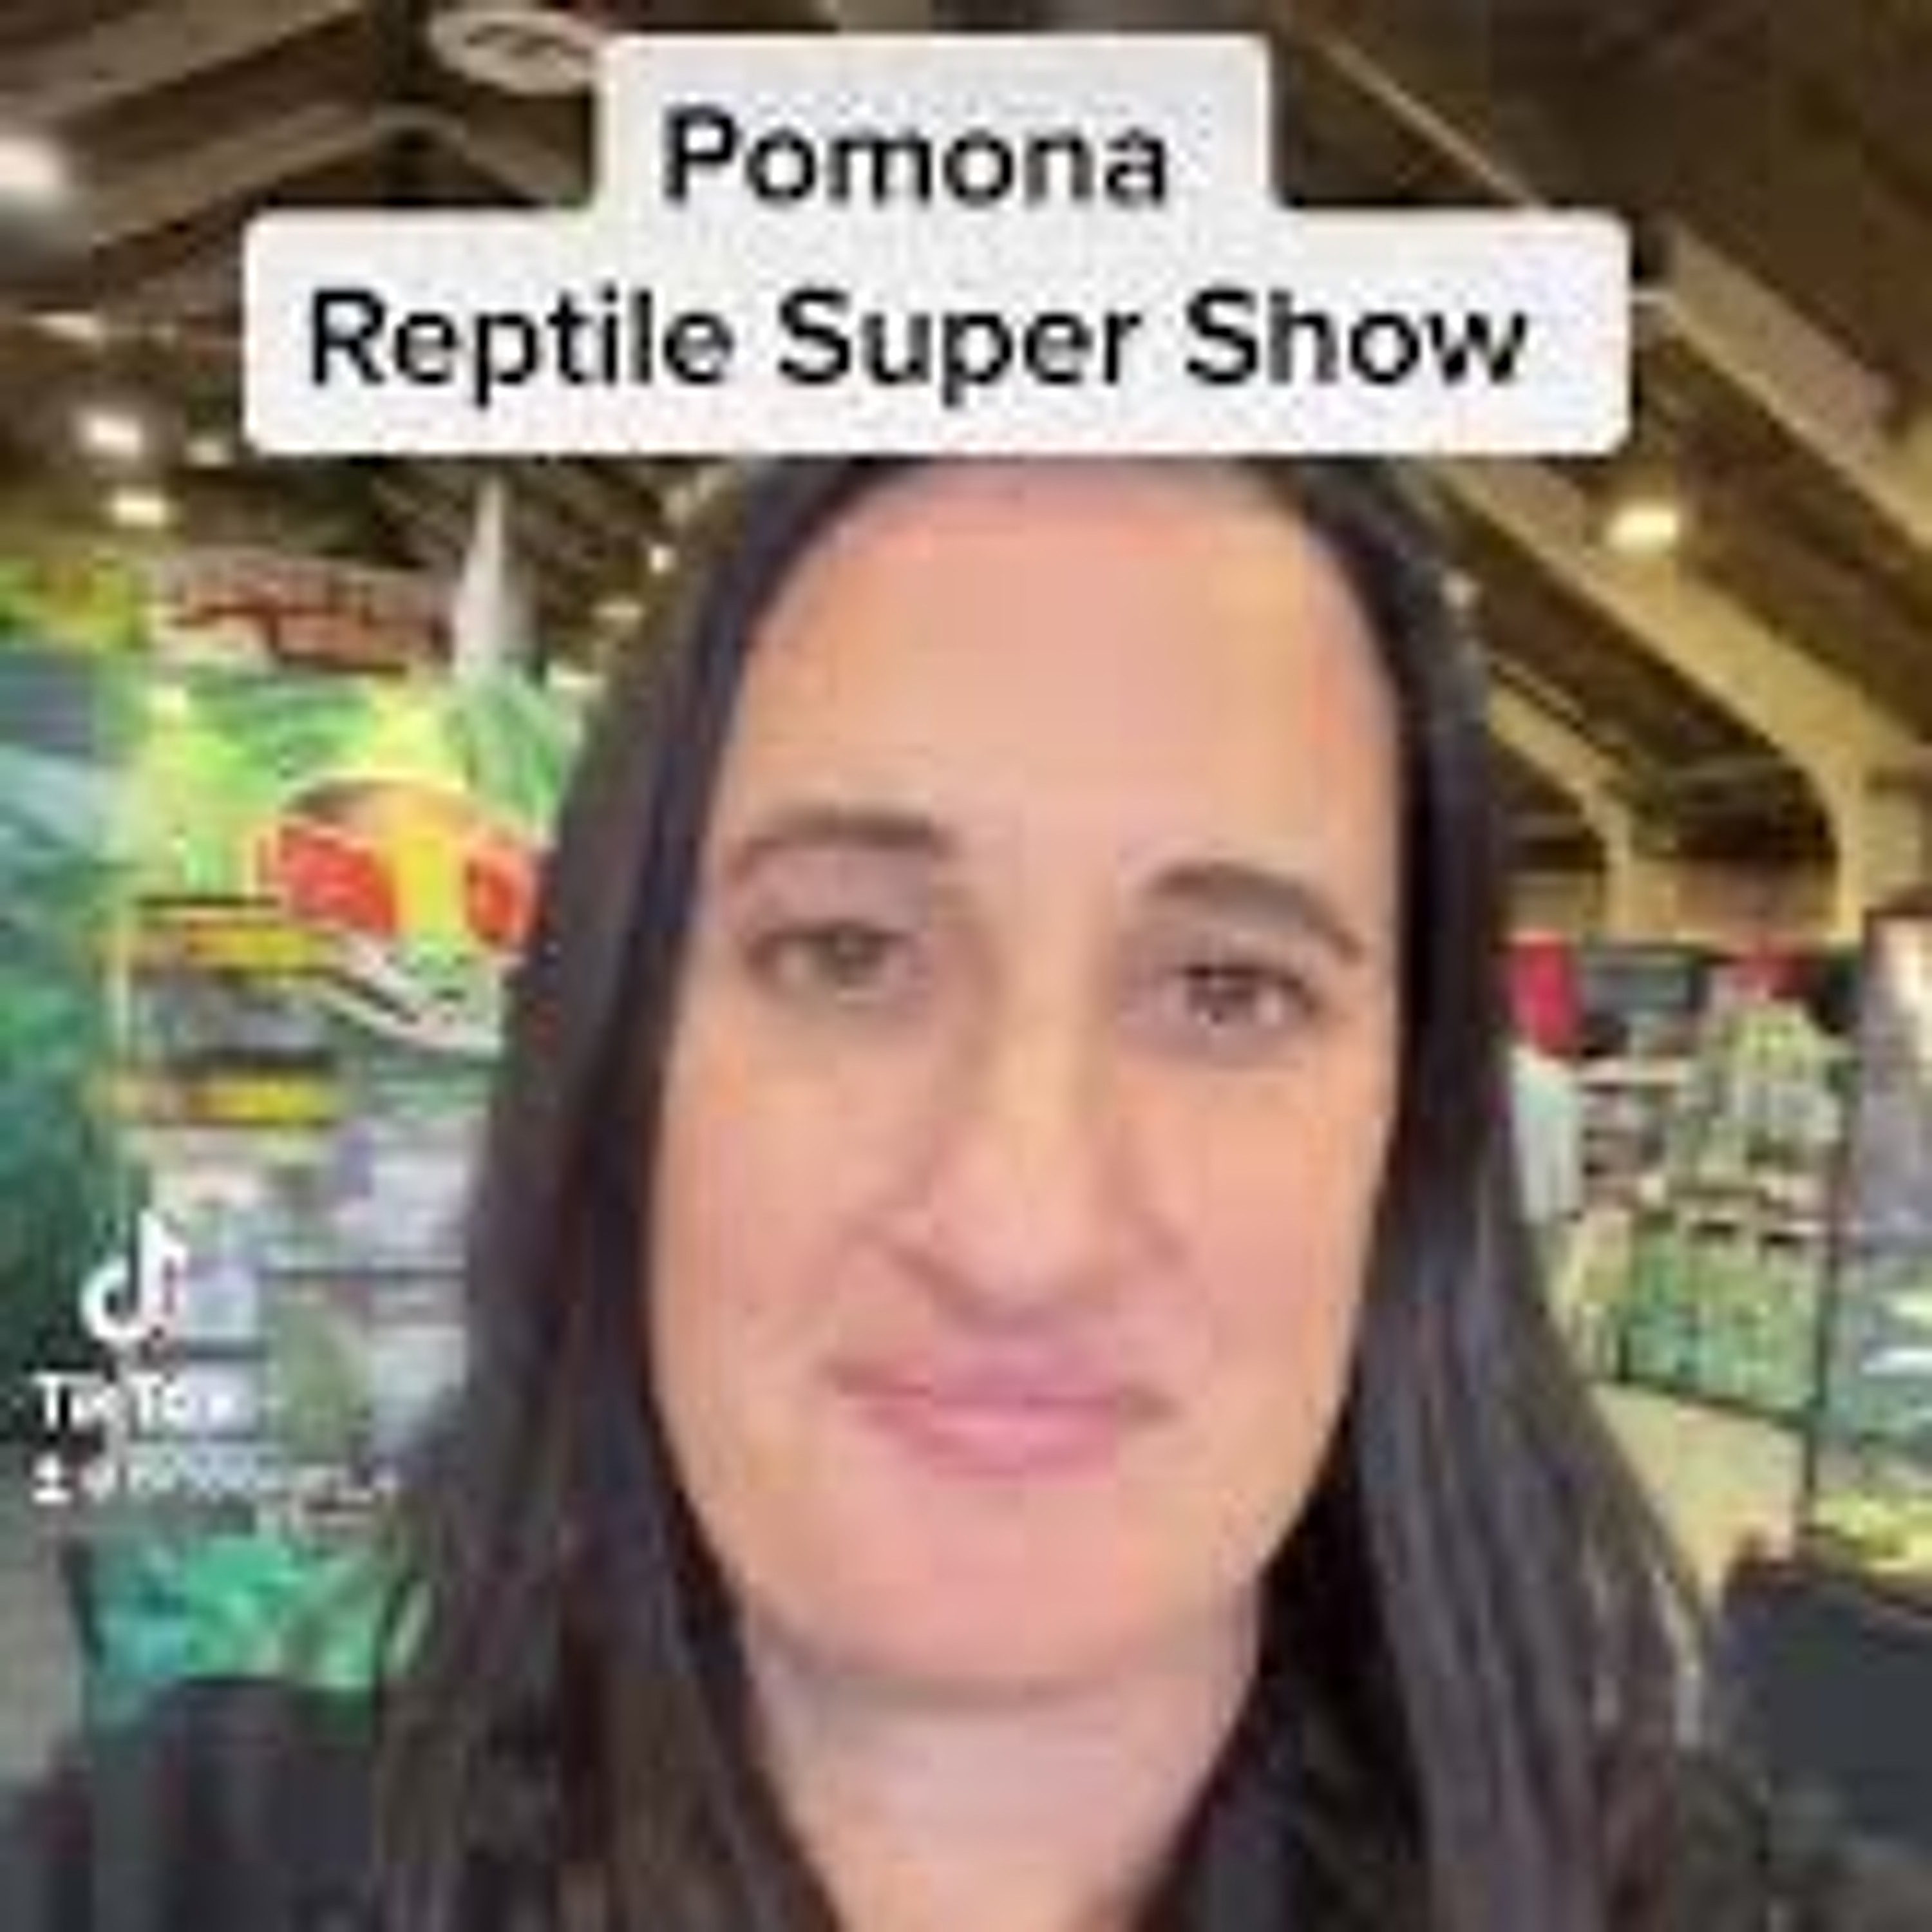 Ep.37 Pomona Reptile Super Show Aftermath